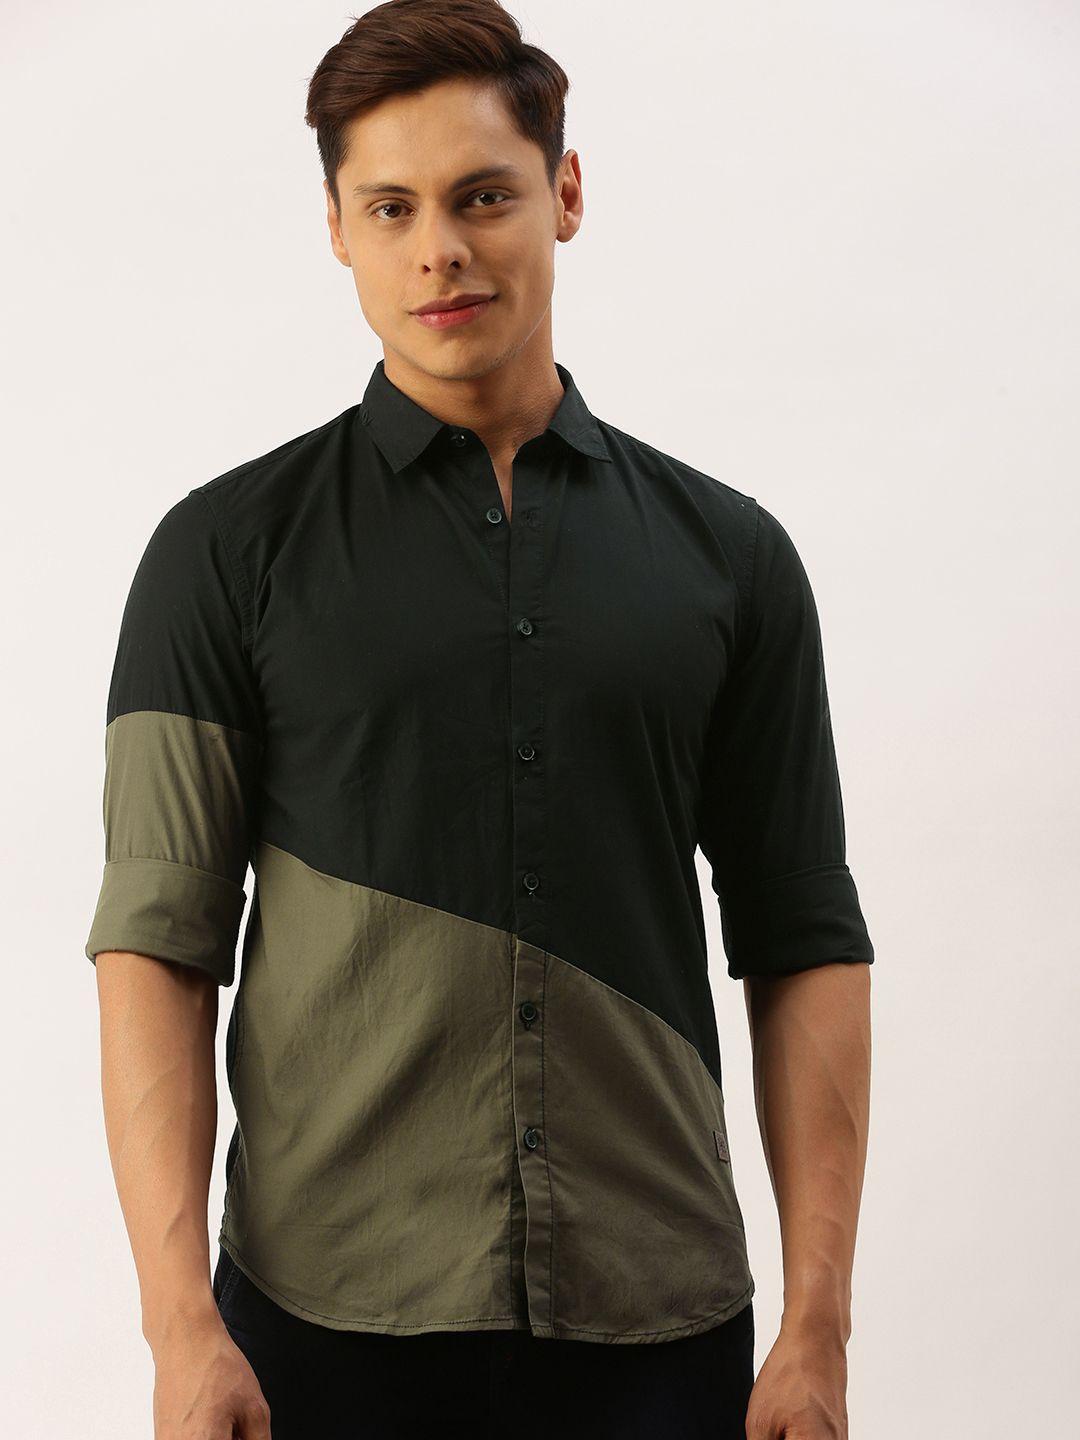 campus sutra men black & olive green regular fit cotton colourblocked casual shirt